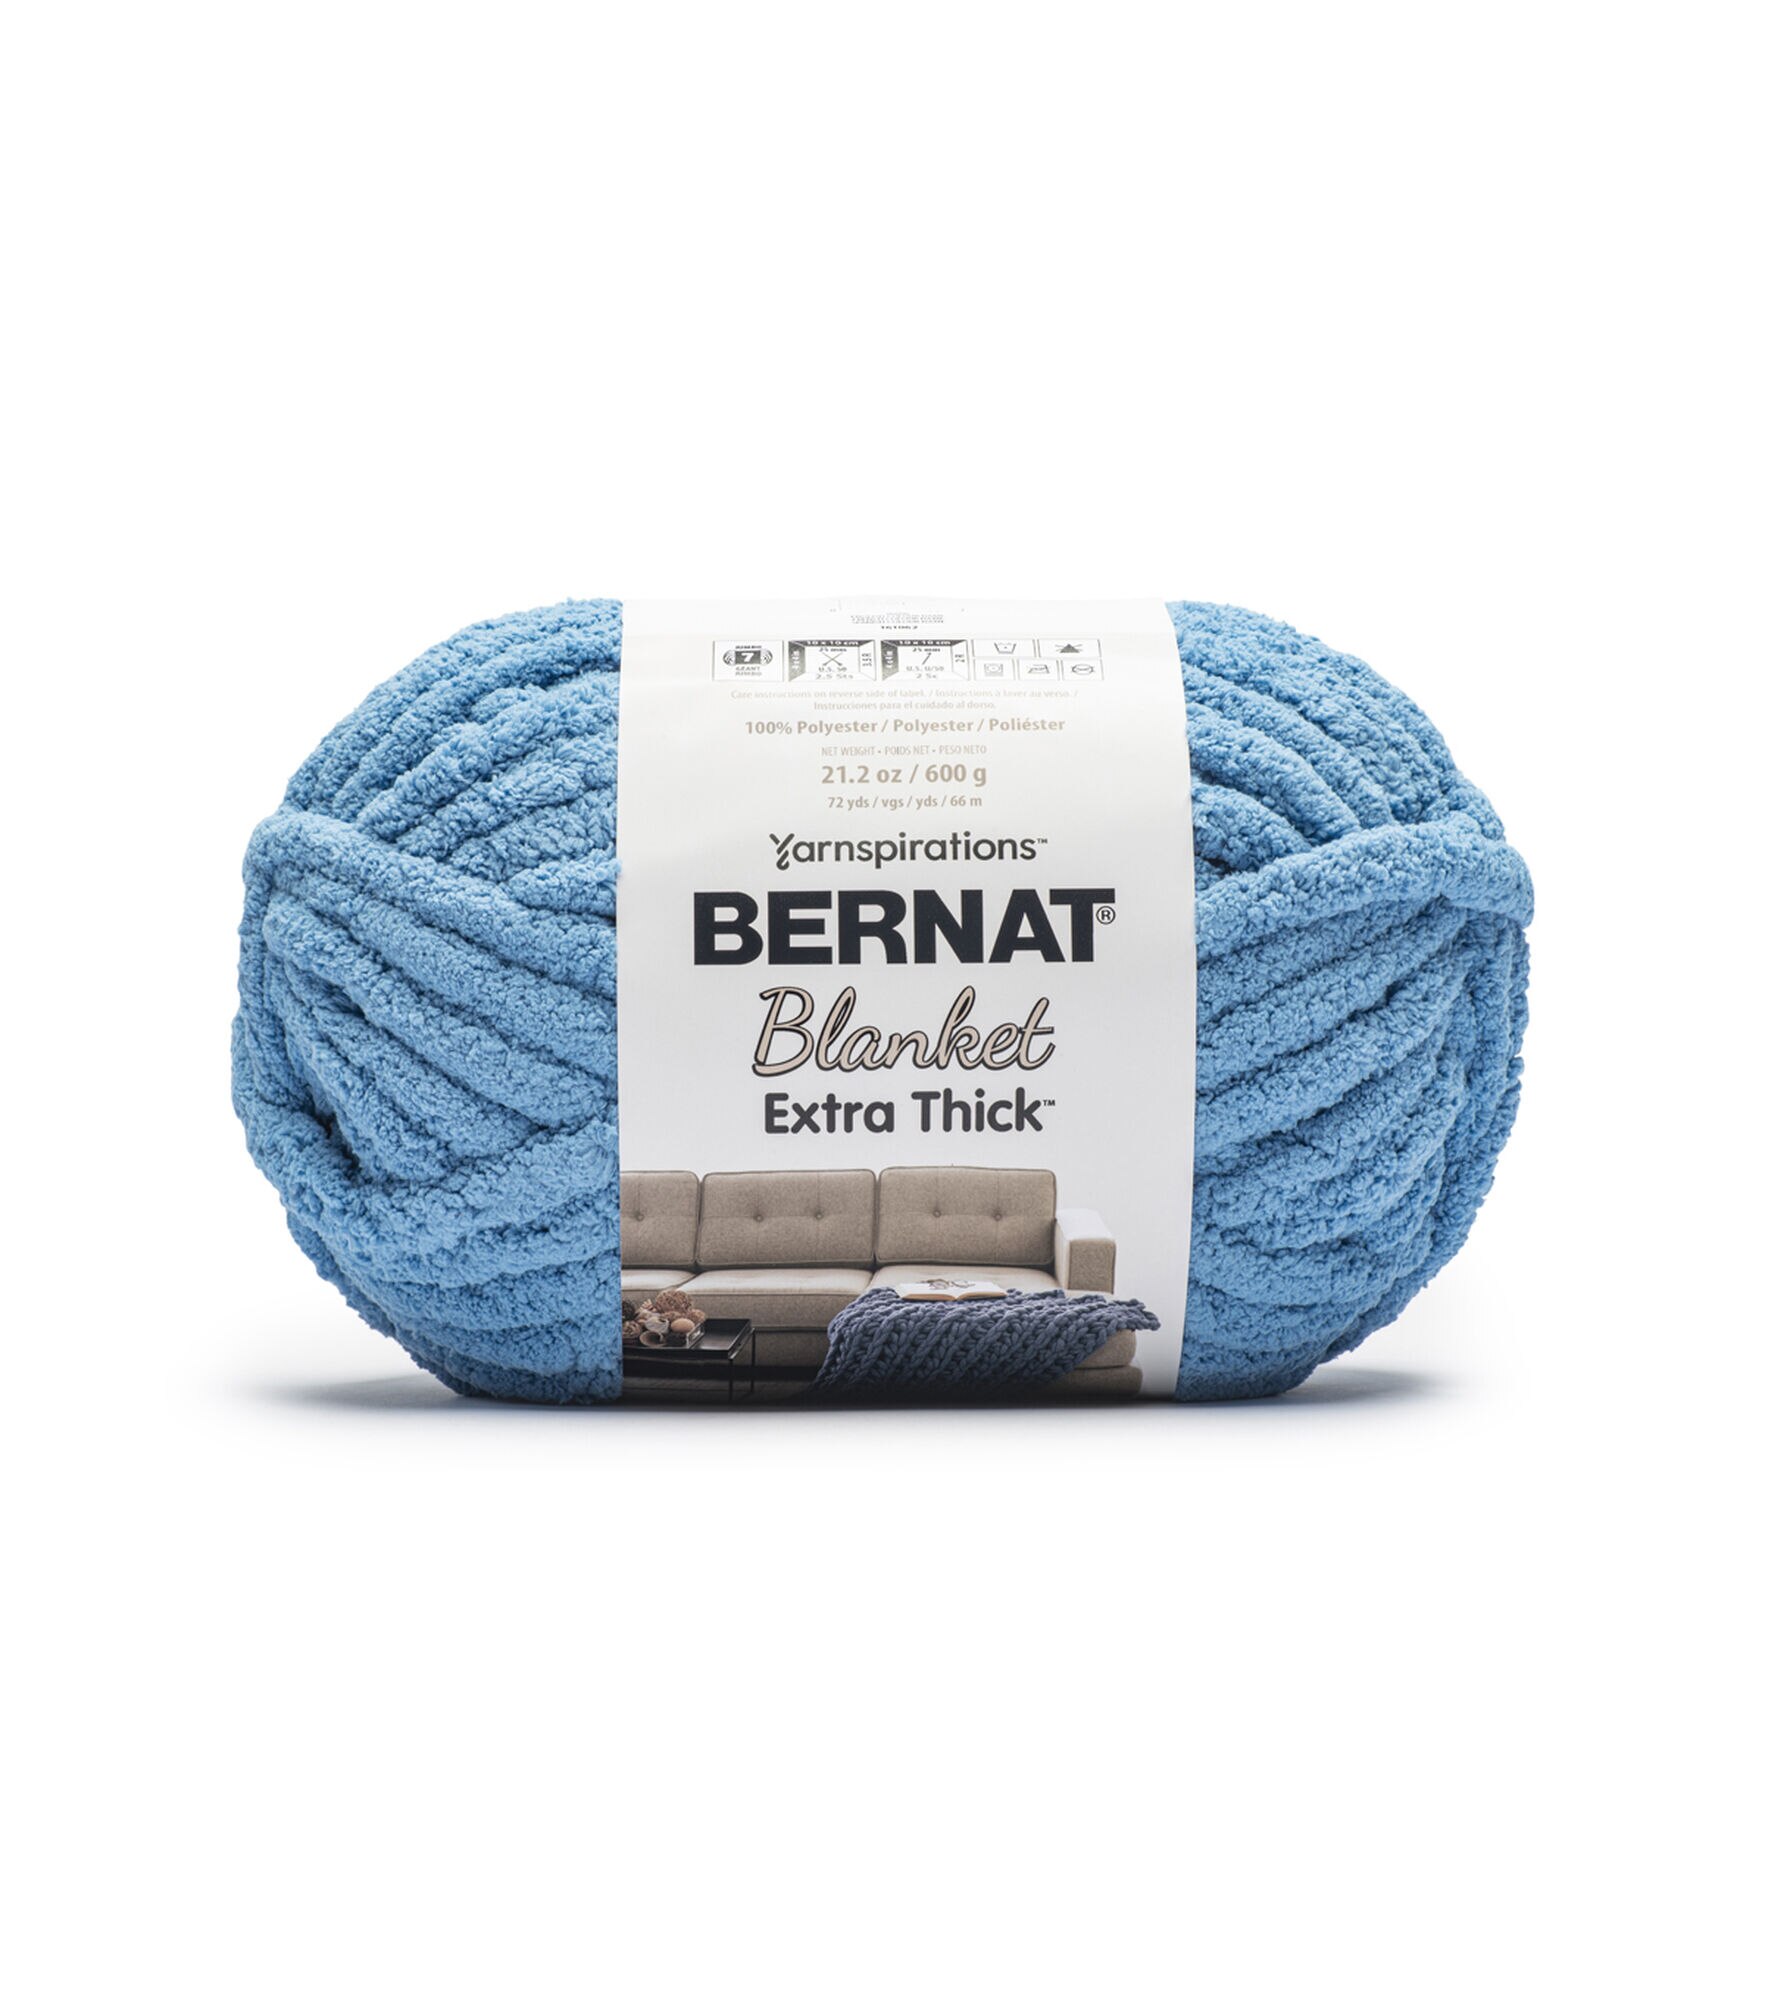 Bernat Blanket Extra Thick Yarn, JOANN